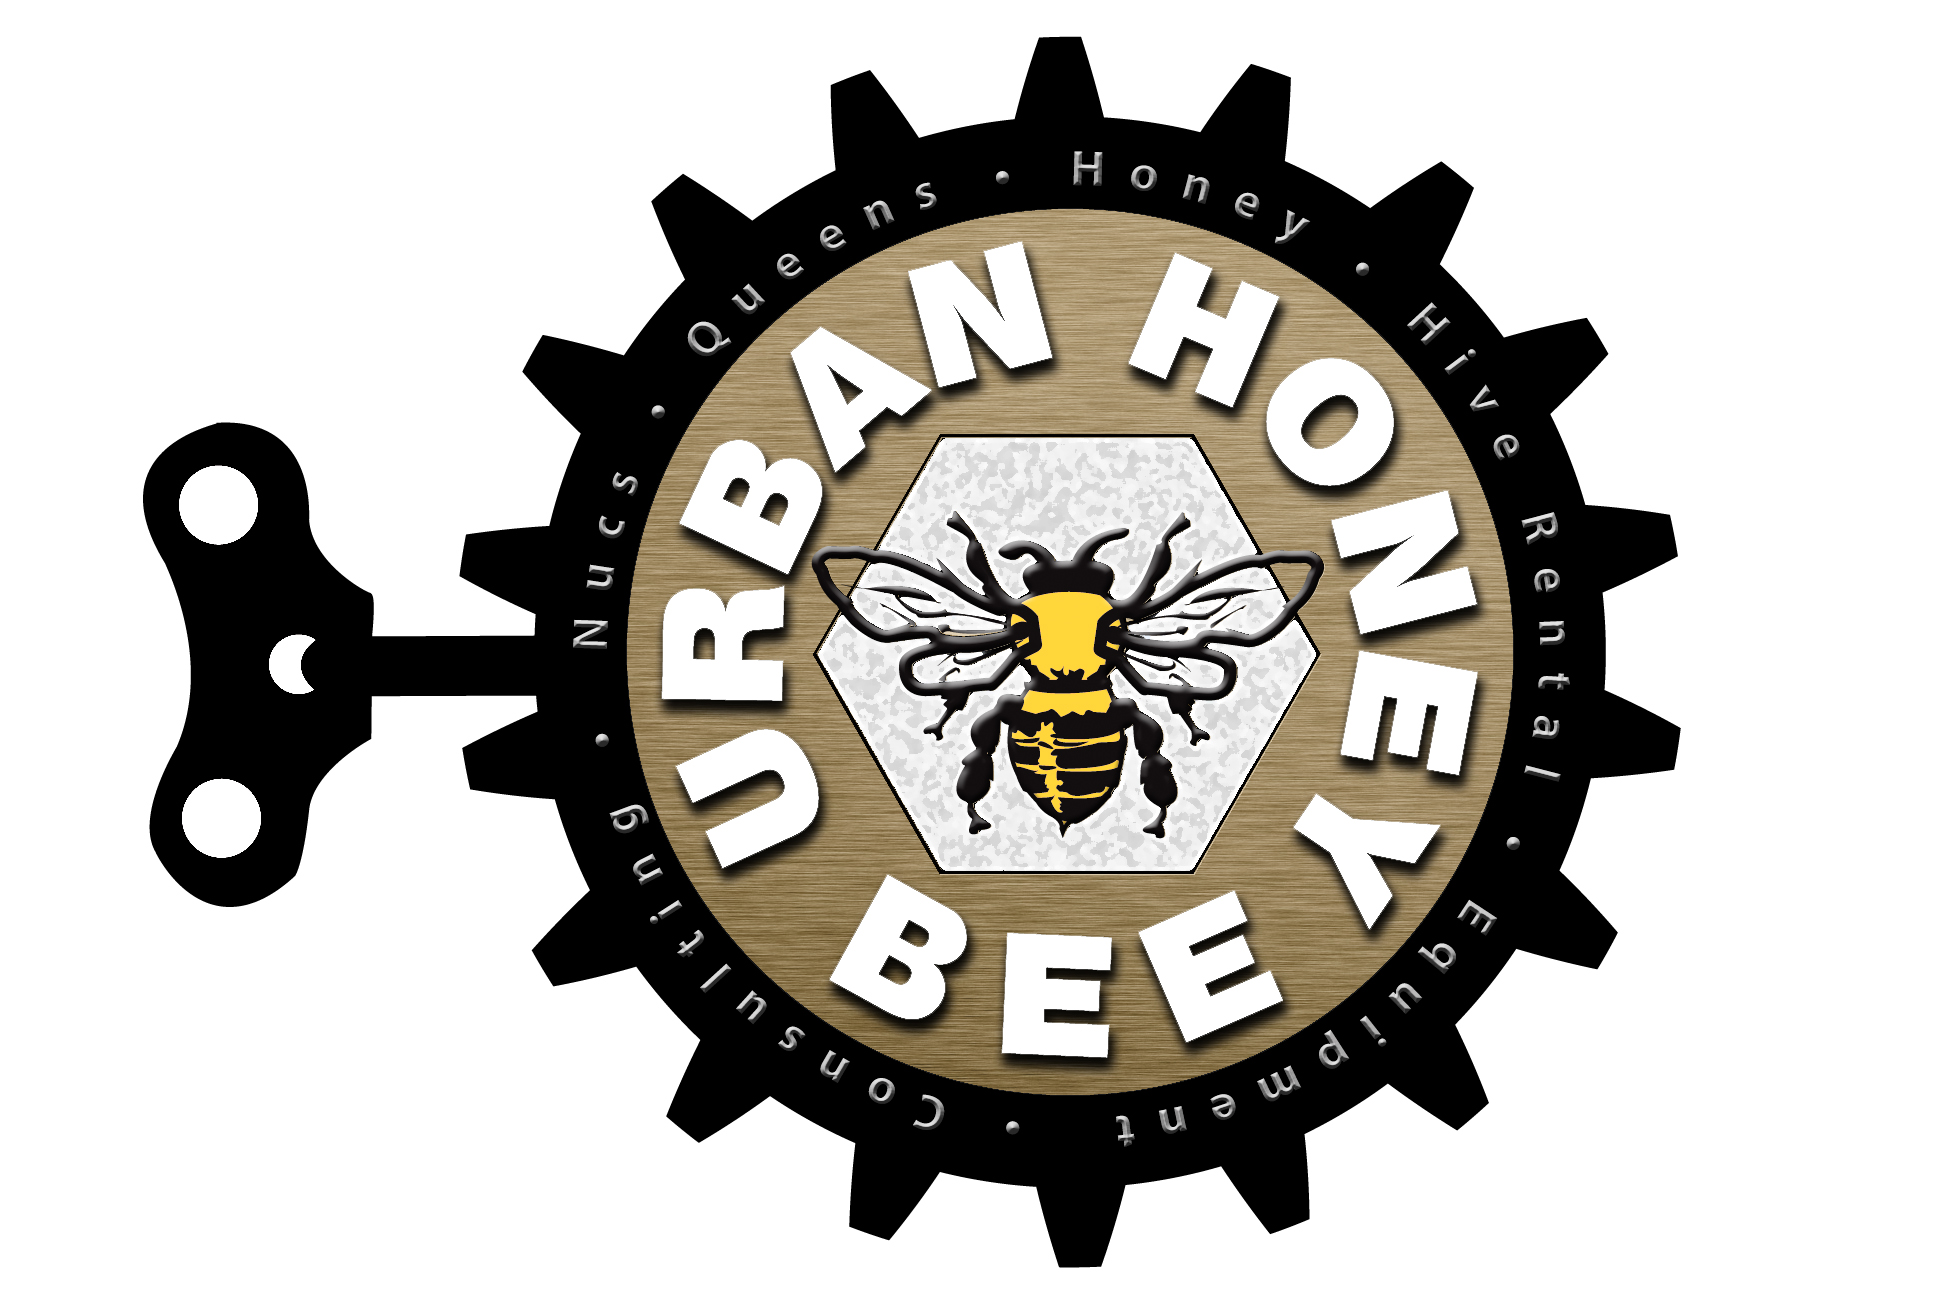 Urban Honey Bee